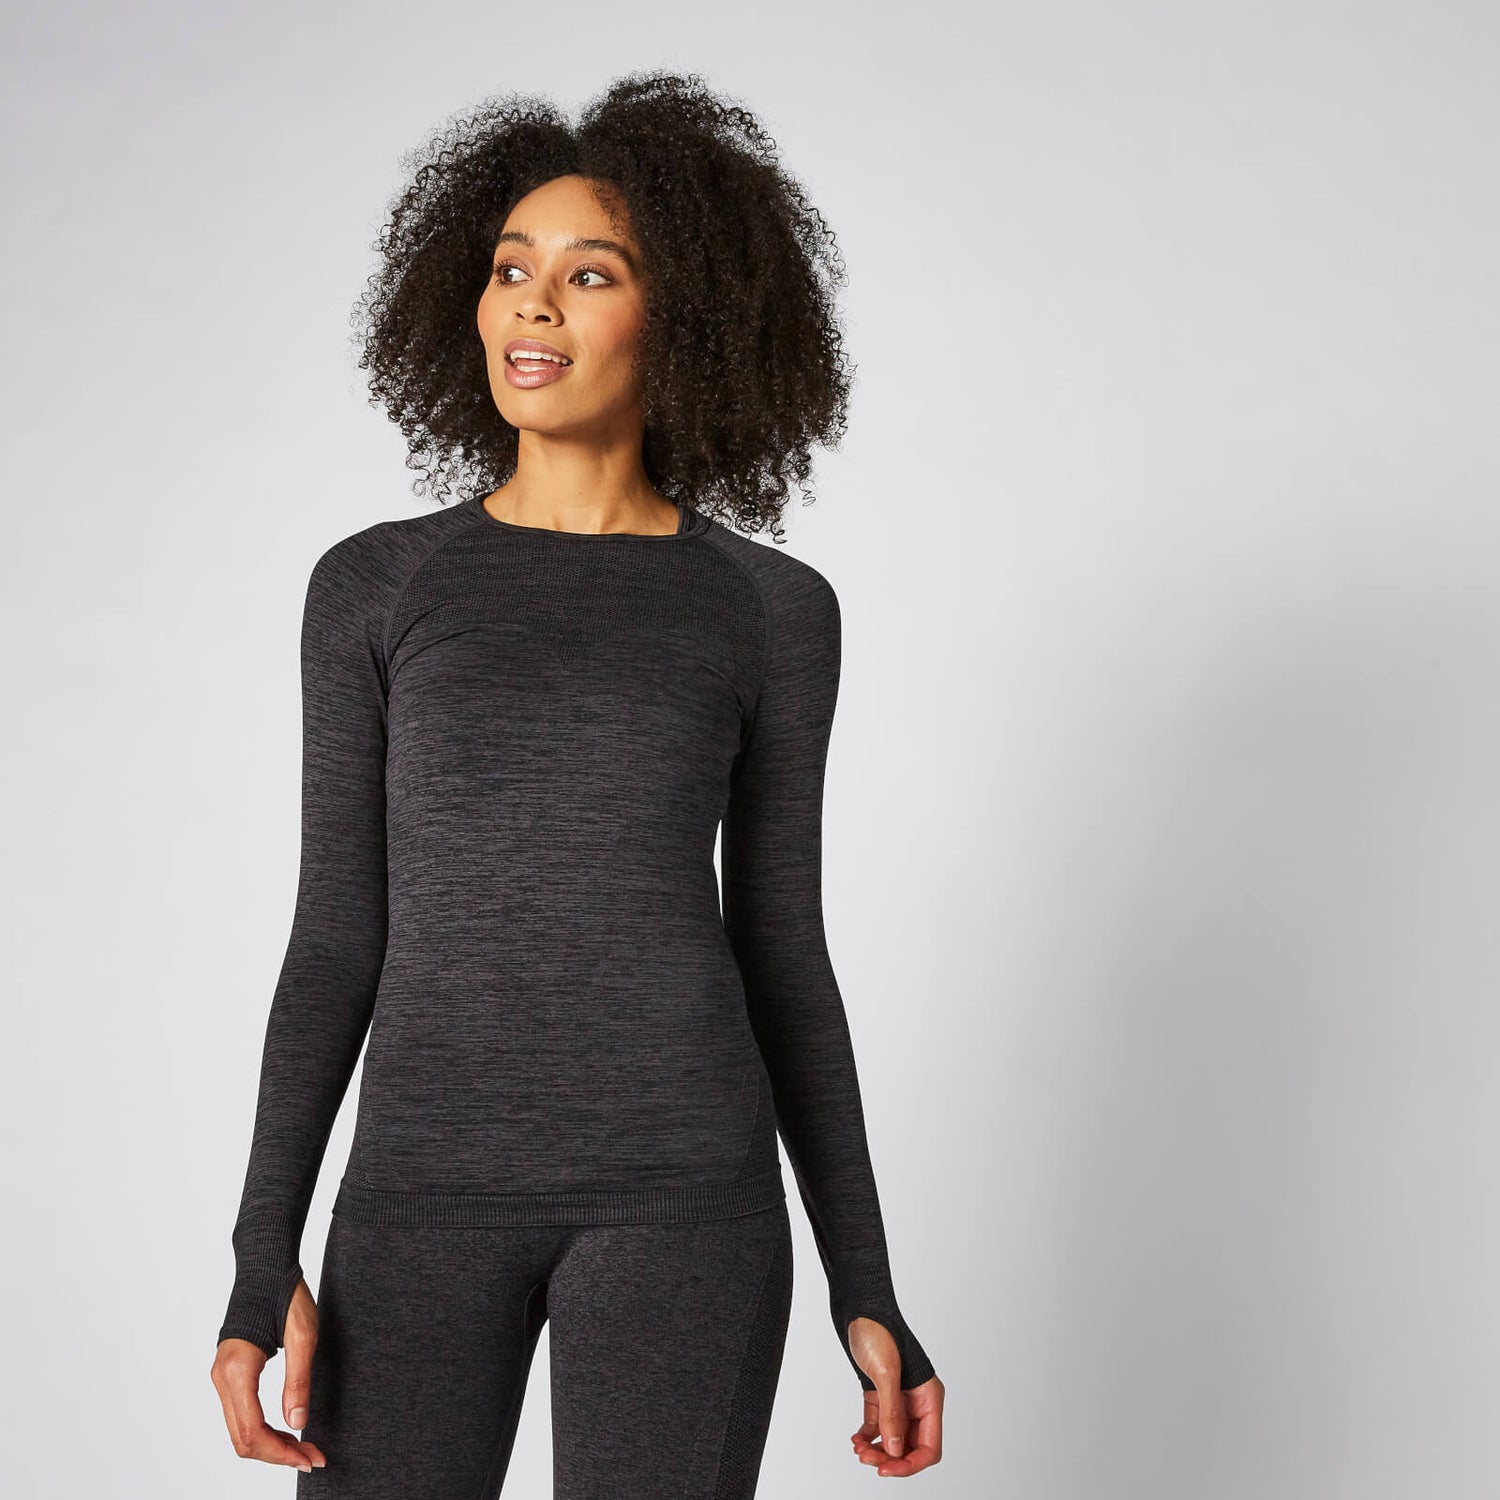 Women's Inspire Seamless Long-Sleeve Top, Black